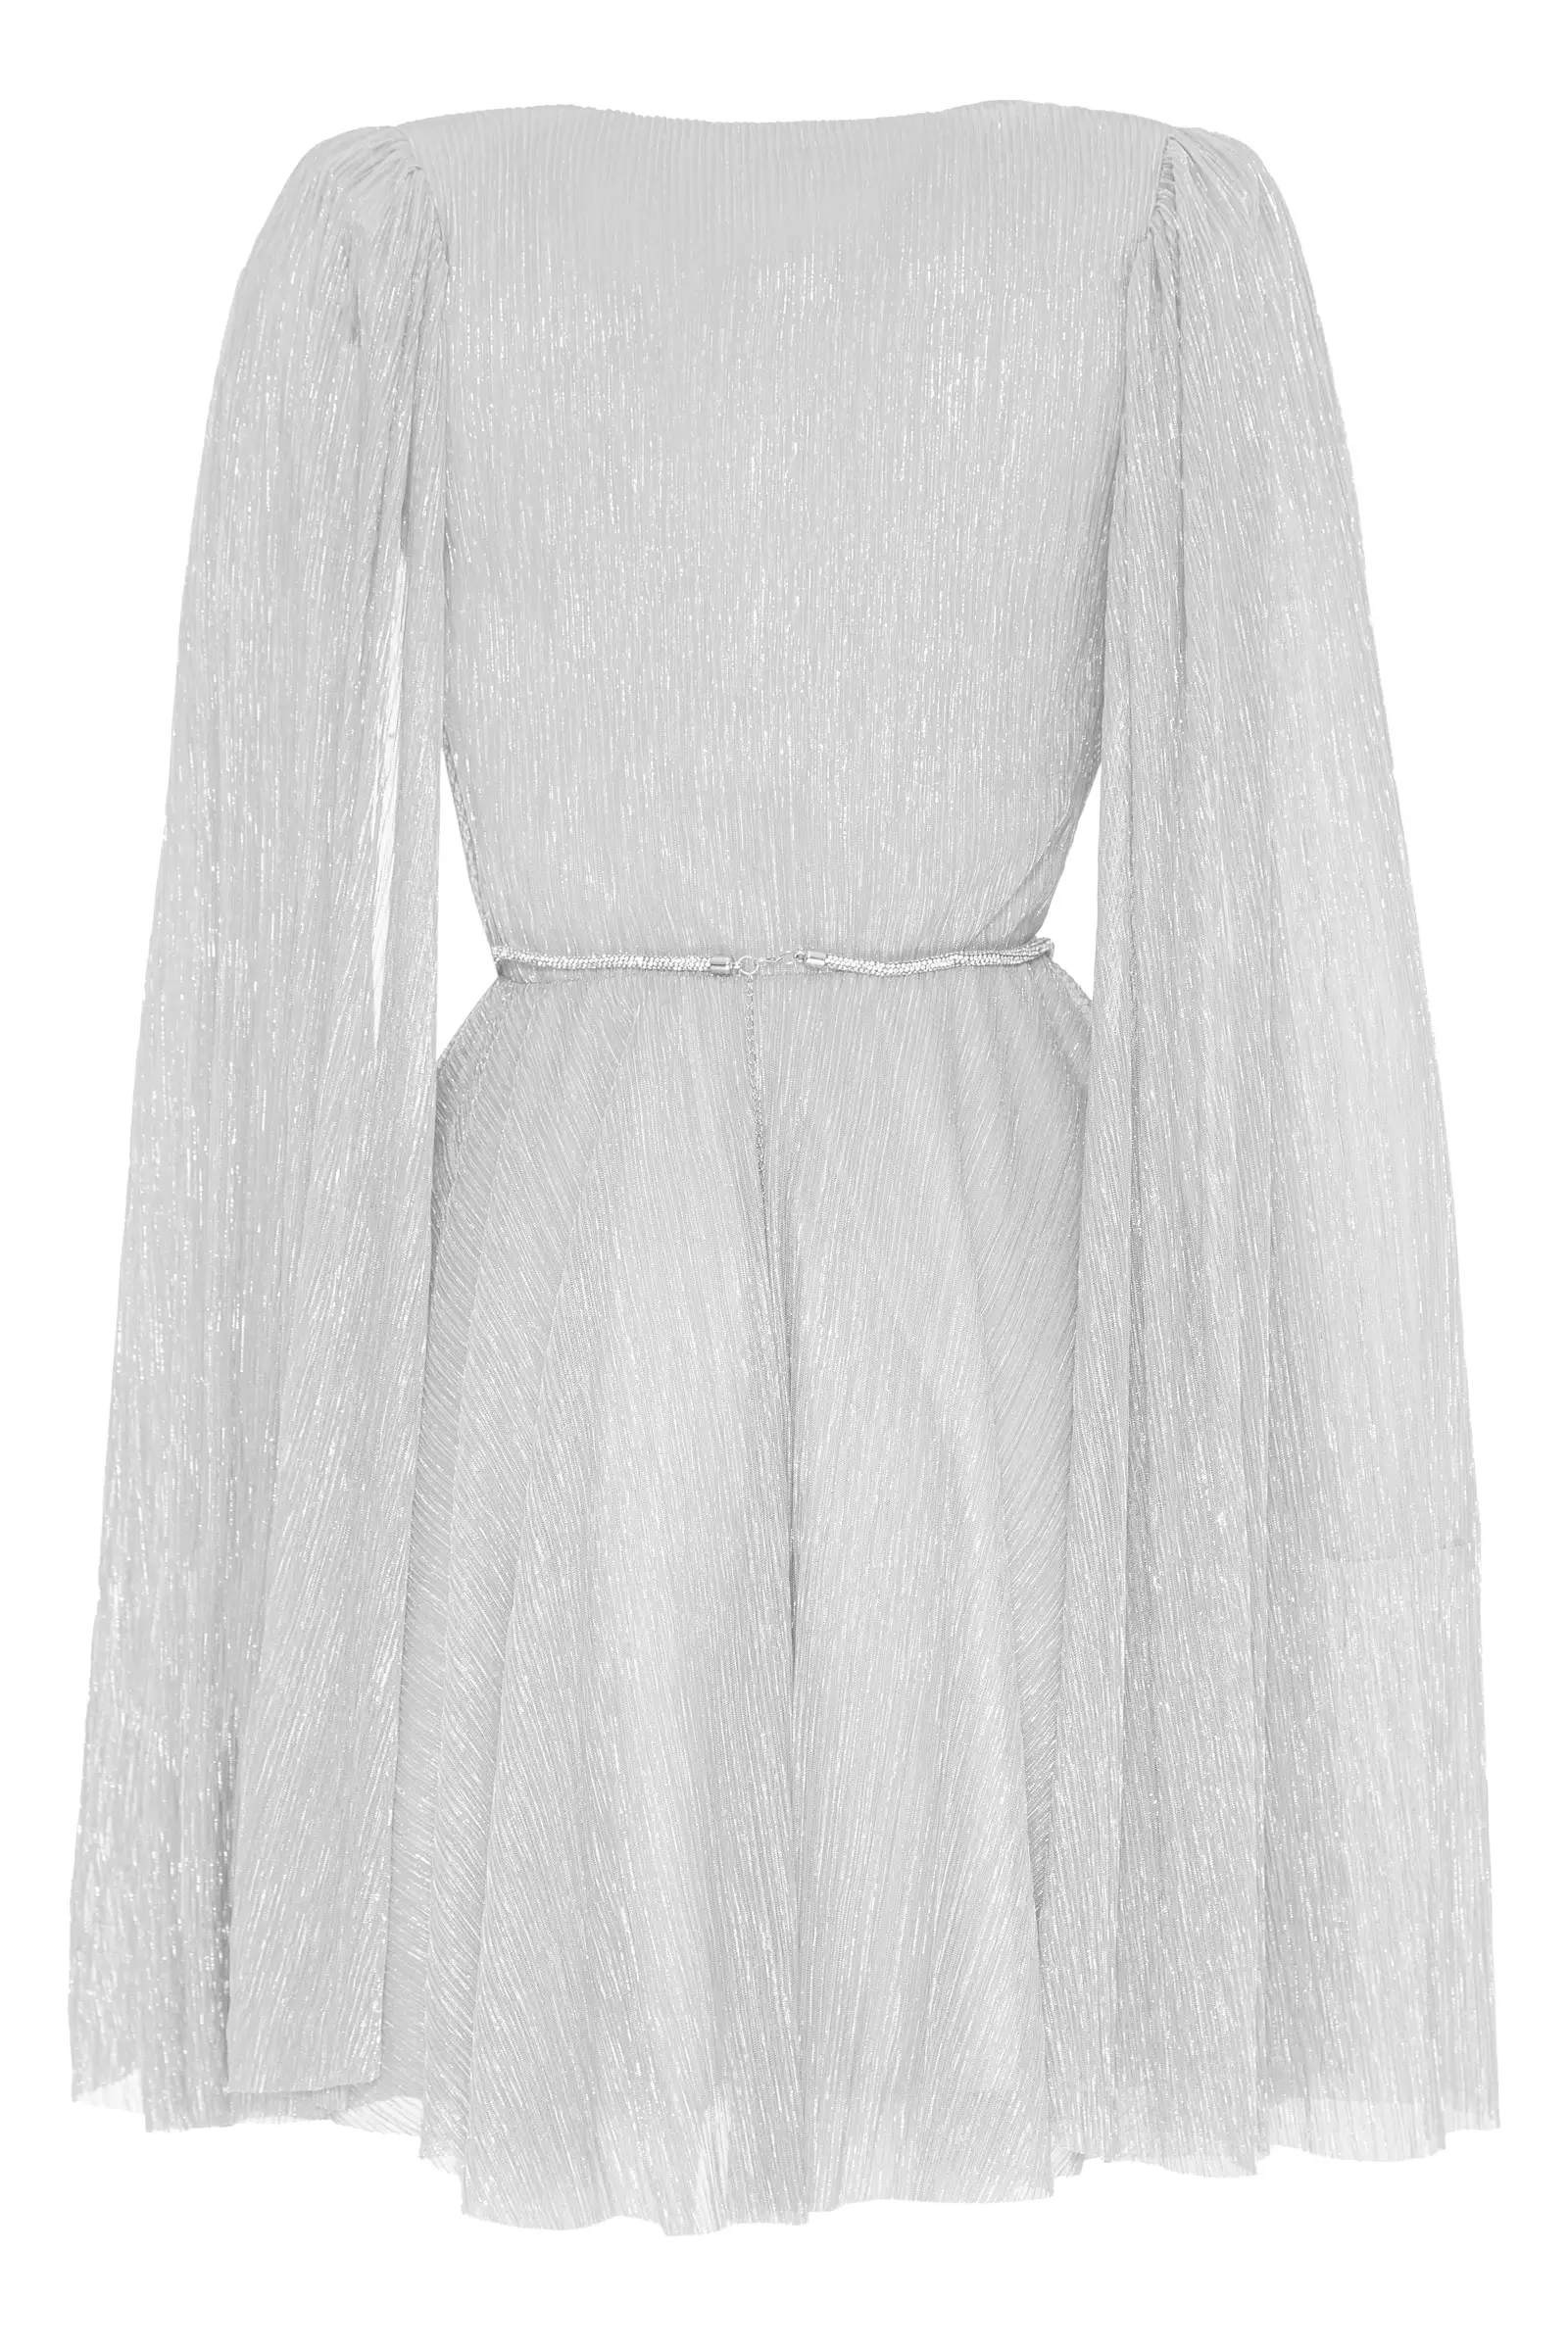 Silver moonlight long sleeve mini dress